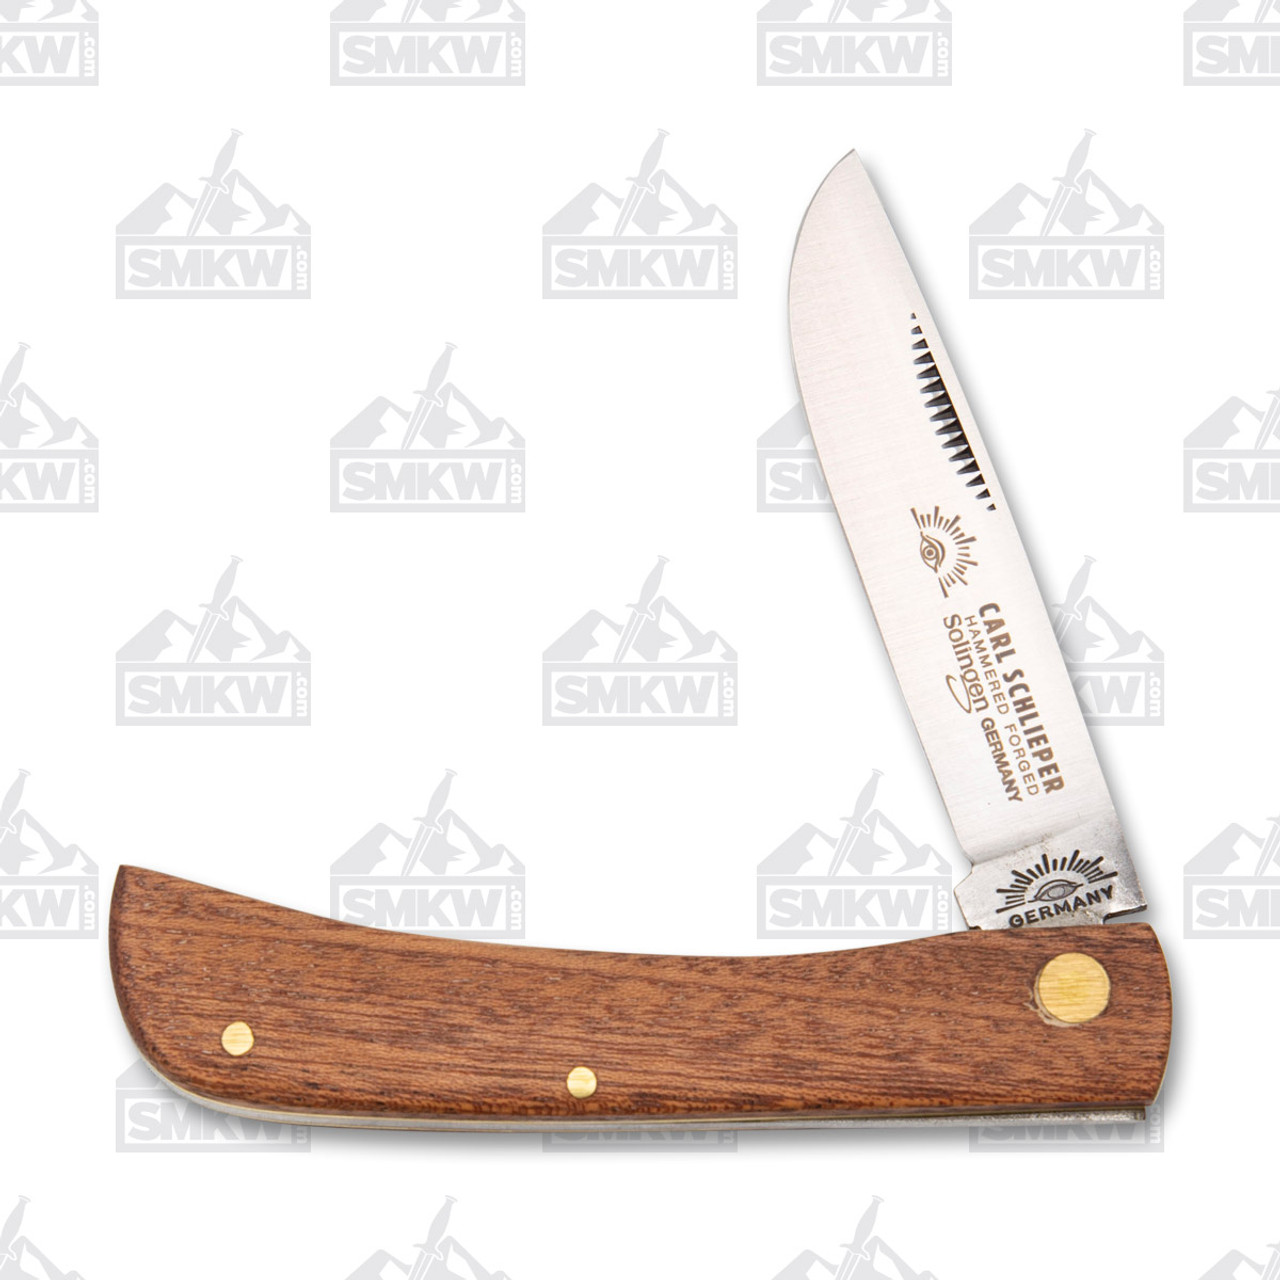 German Eye Clodbuster Jr. Folding Pocket Knife Slip Jt Wood Steel